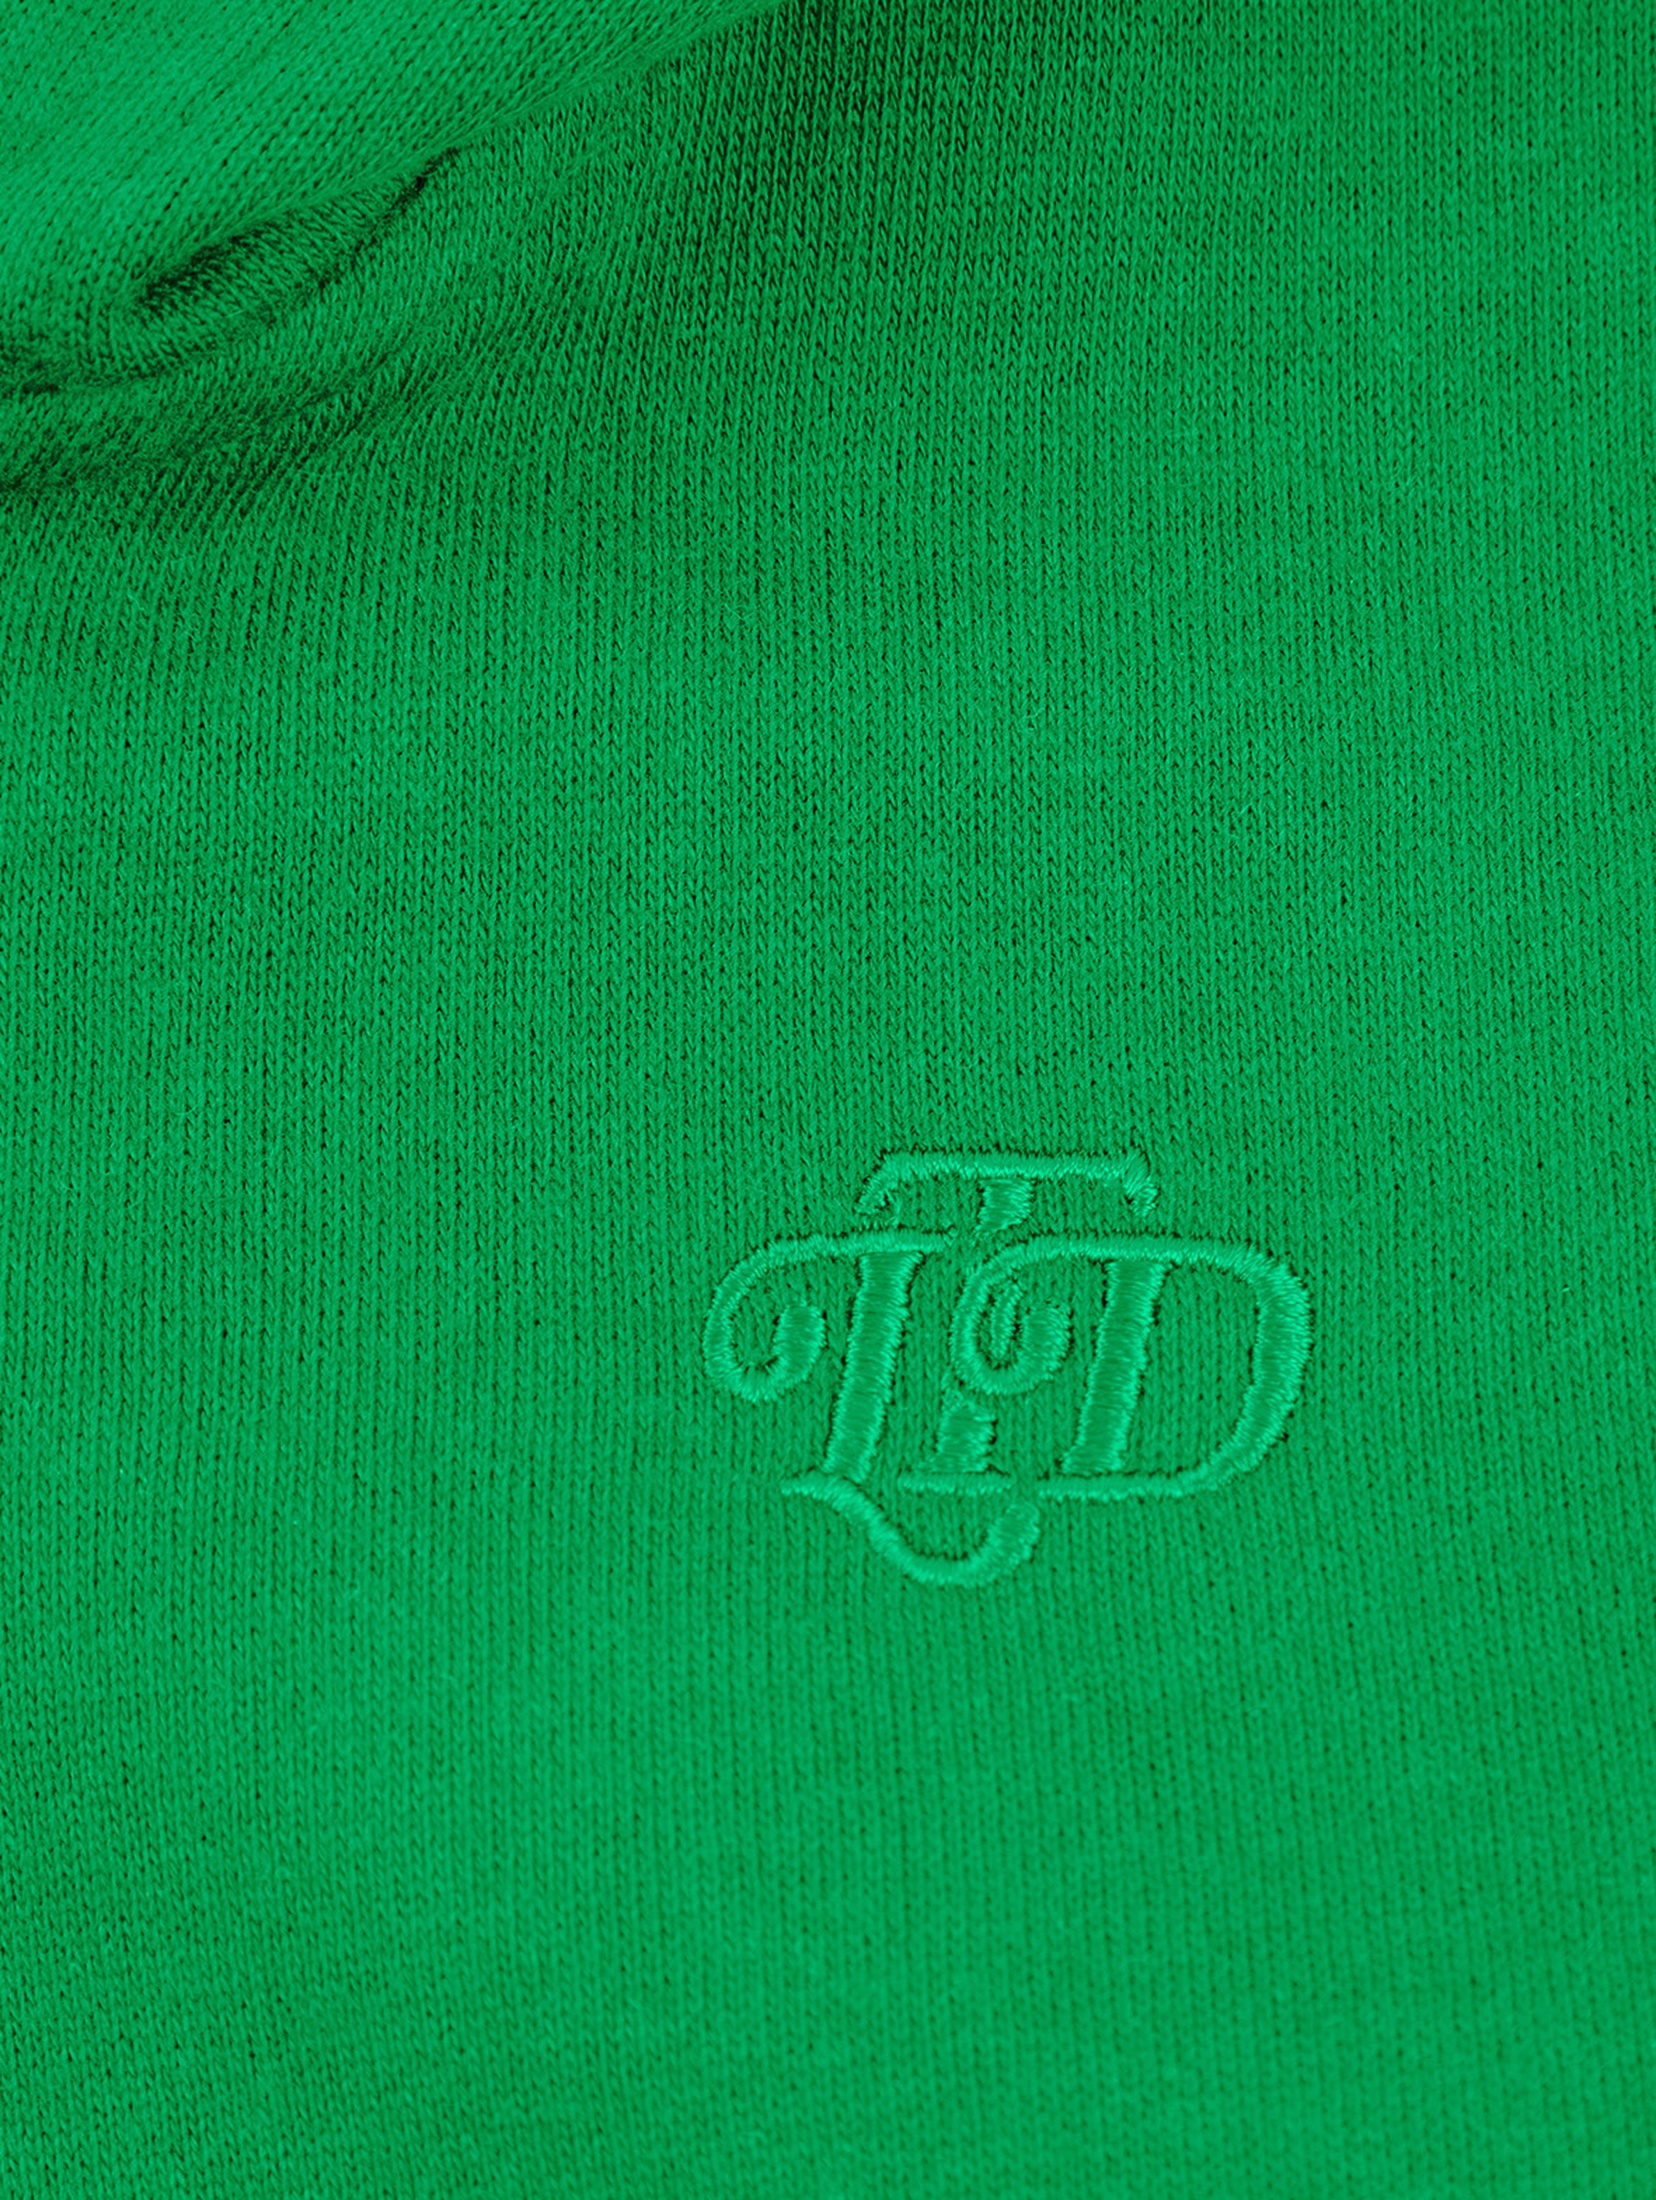 Zielona bluza rozpinana z kapturem - unisex - Limited Edition